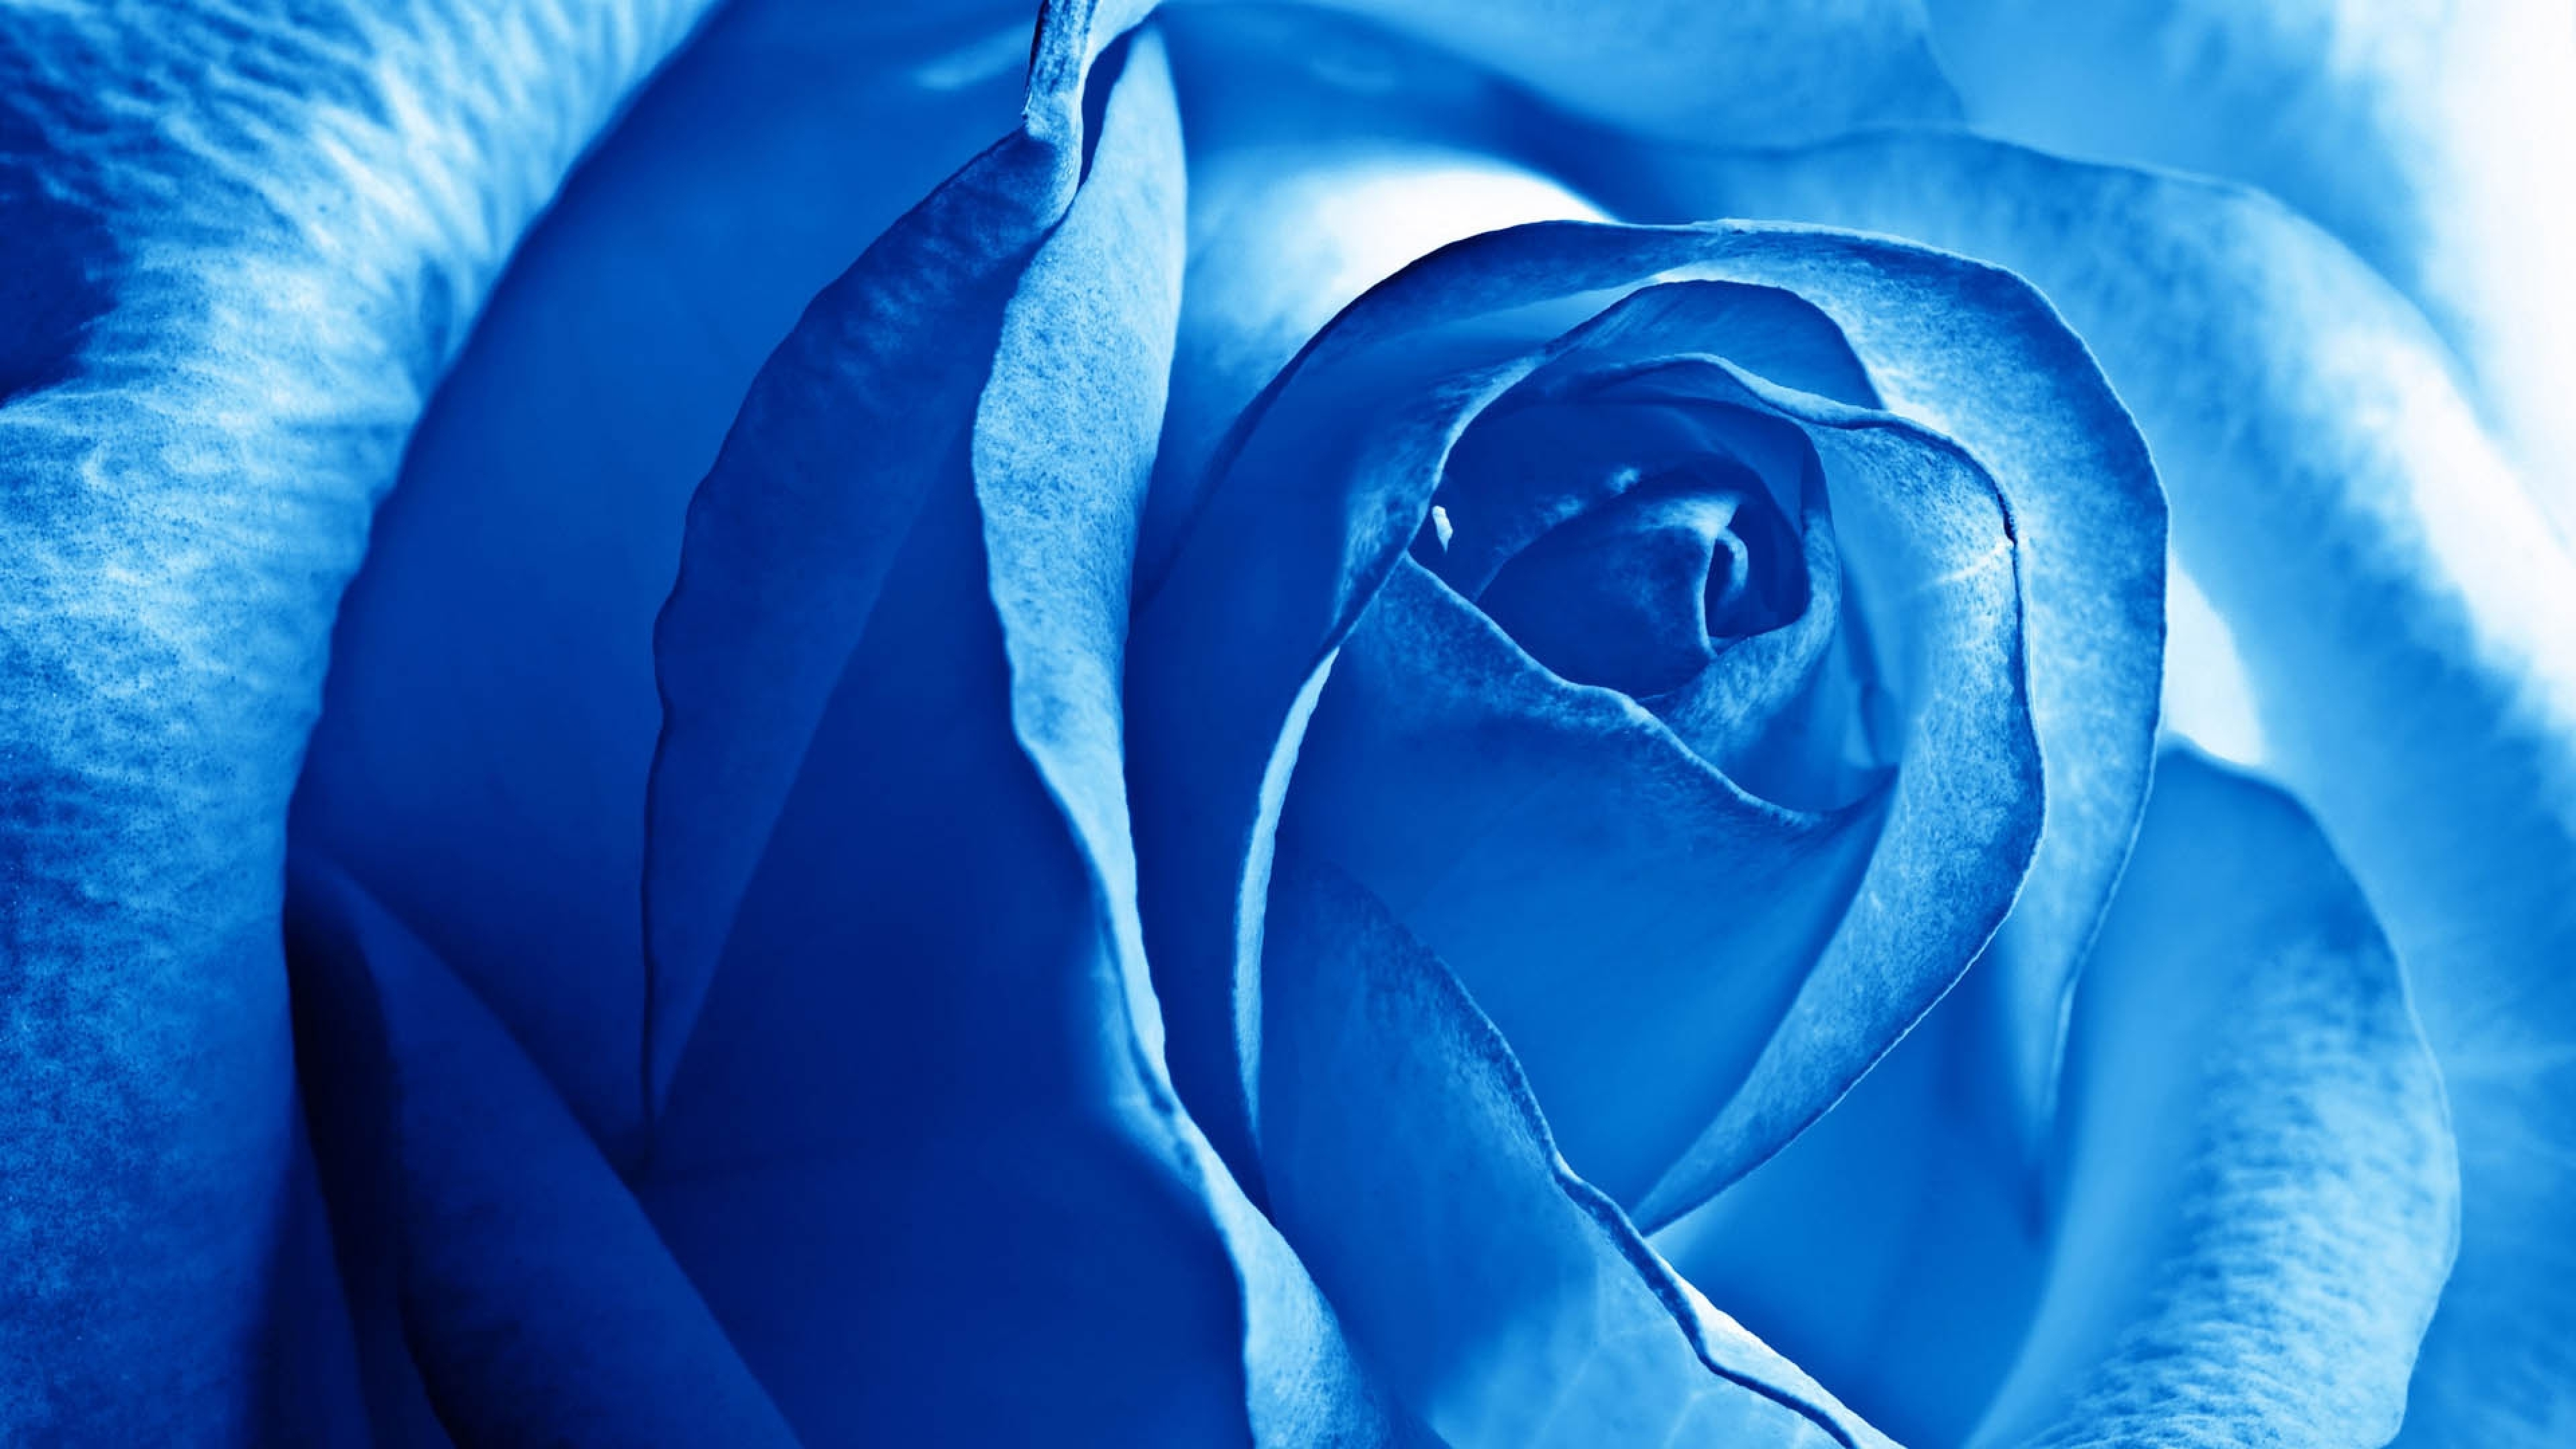 3840x2160 Rose Blue Light 4k Wallpaper Hd Flowers 4k Wallpapers